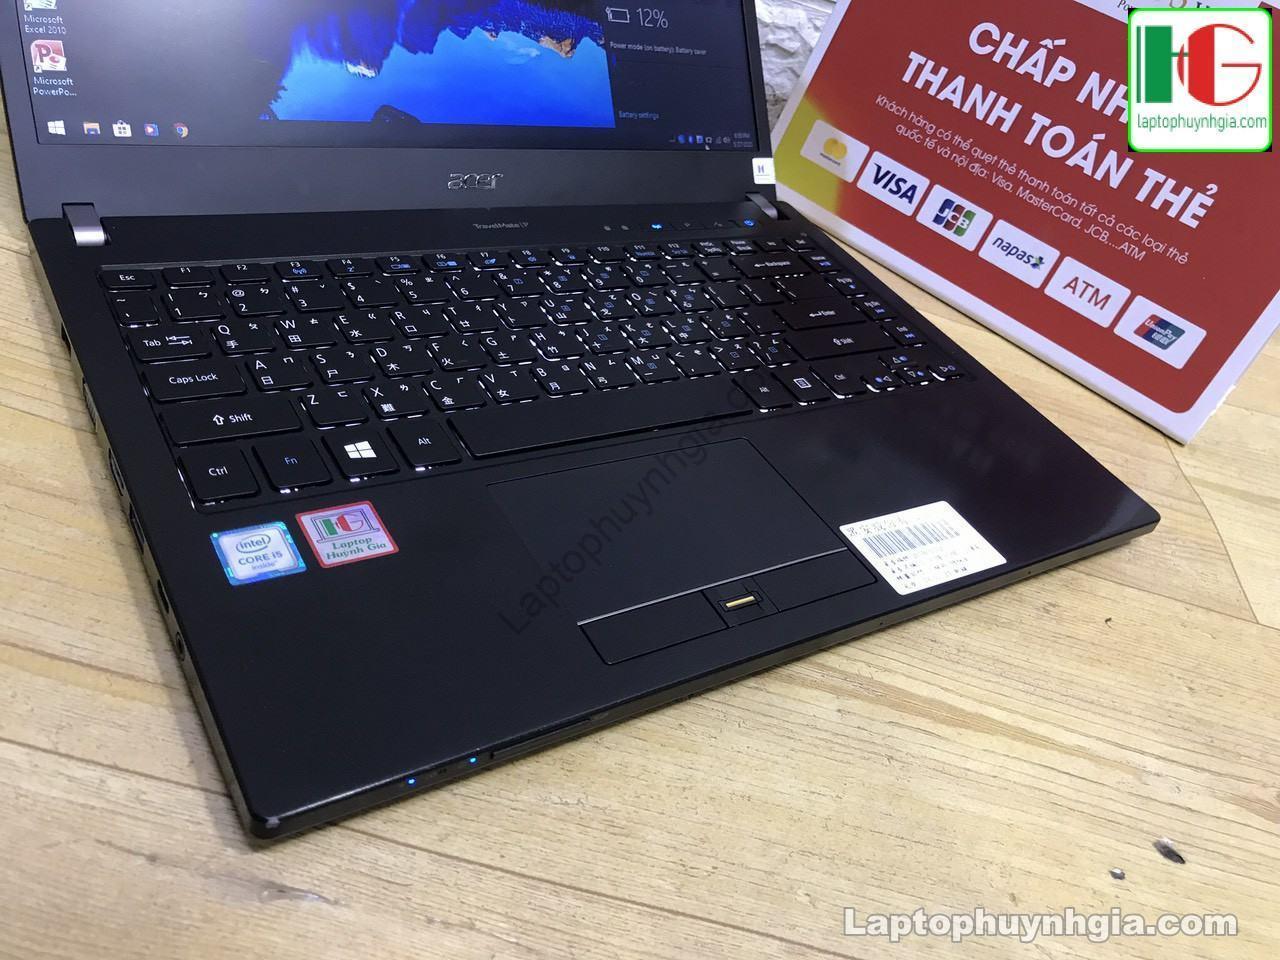 Laptop Acer P658 I5 6200u 4g Hdd 500g Lcd 14 Laptopcubinhduong.vn 1